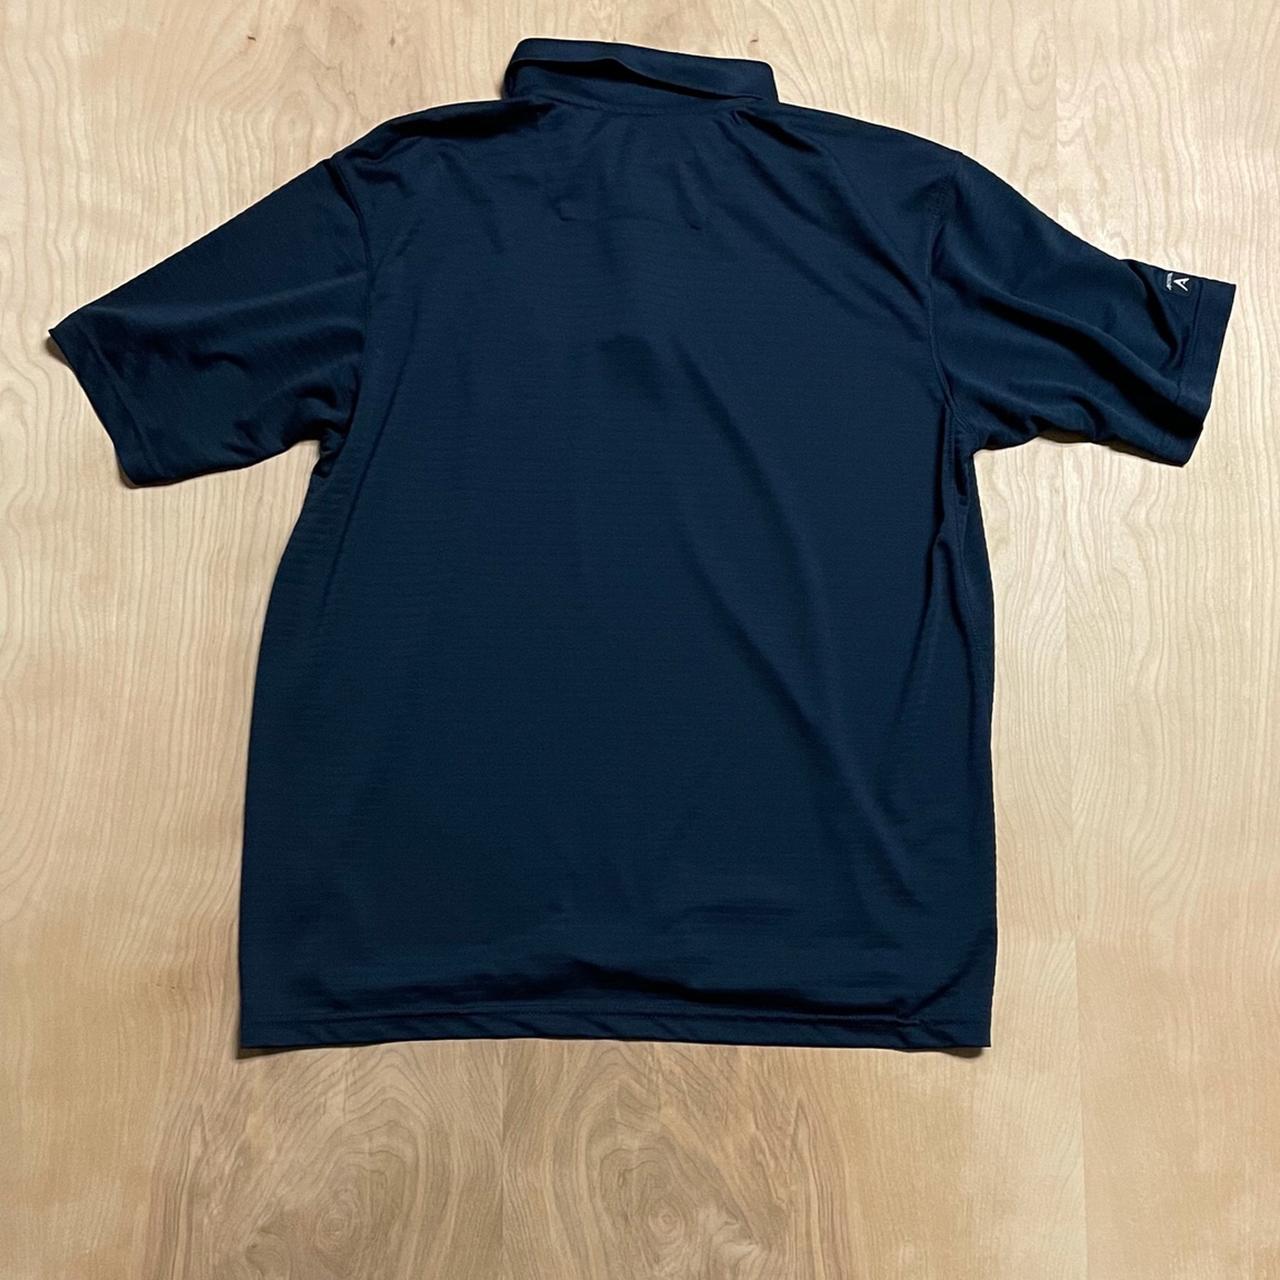 Men's Navy Polo-shirts (2)